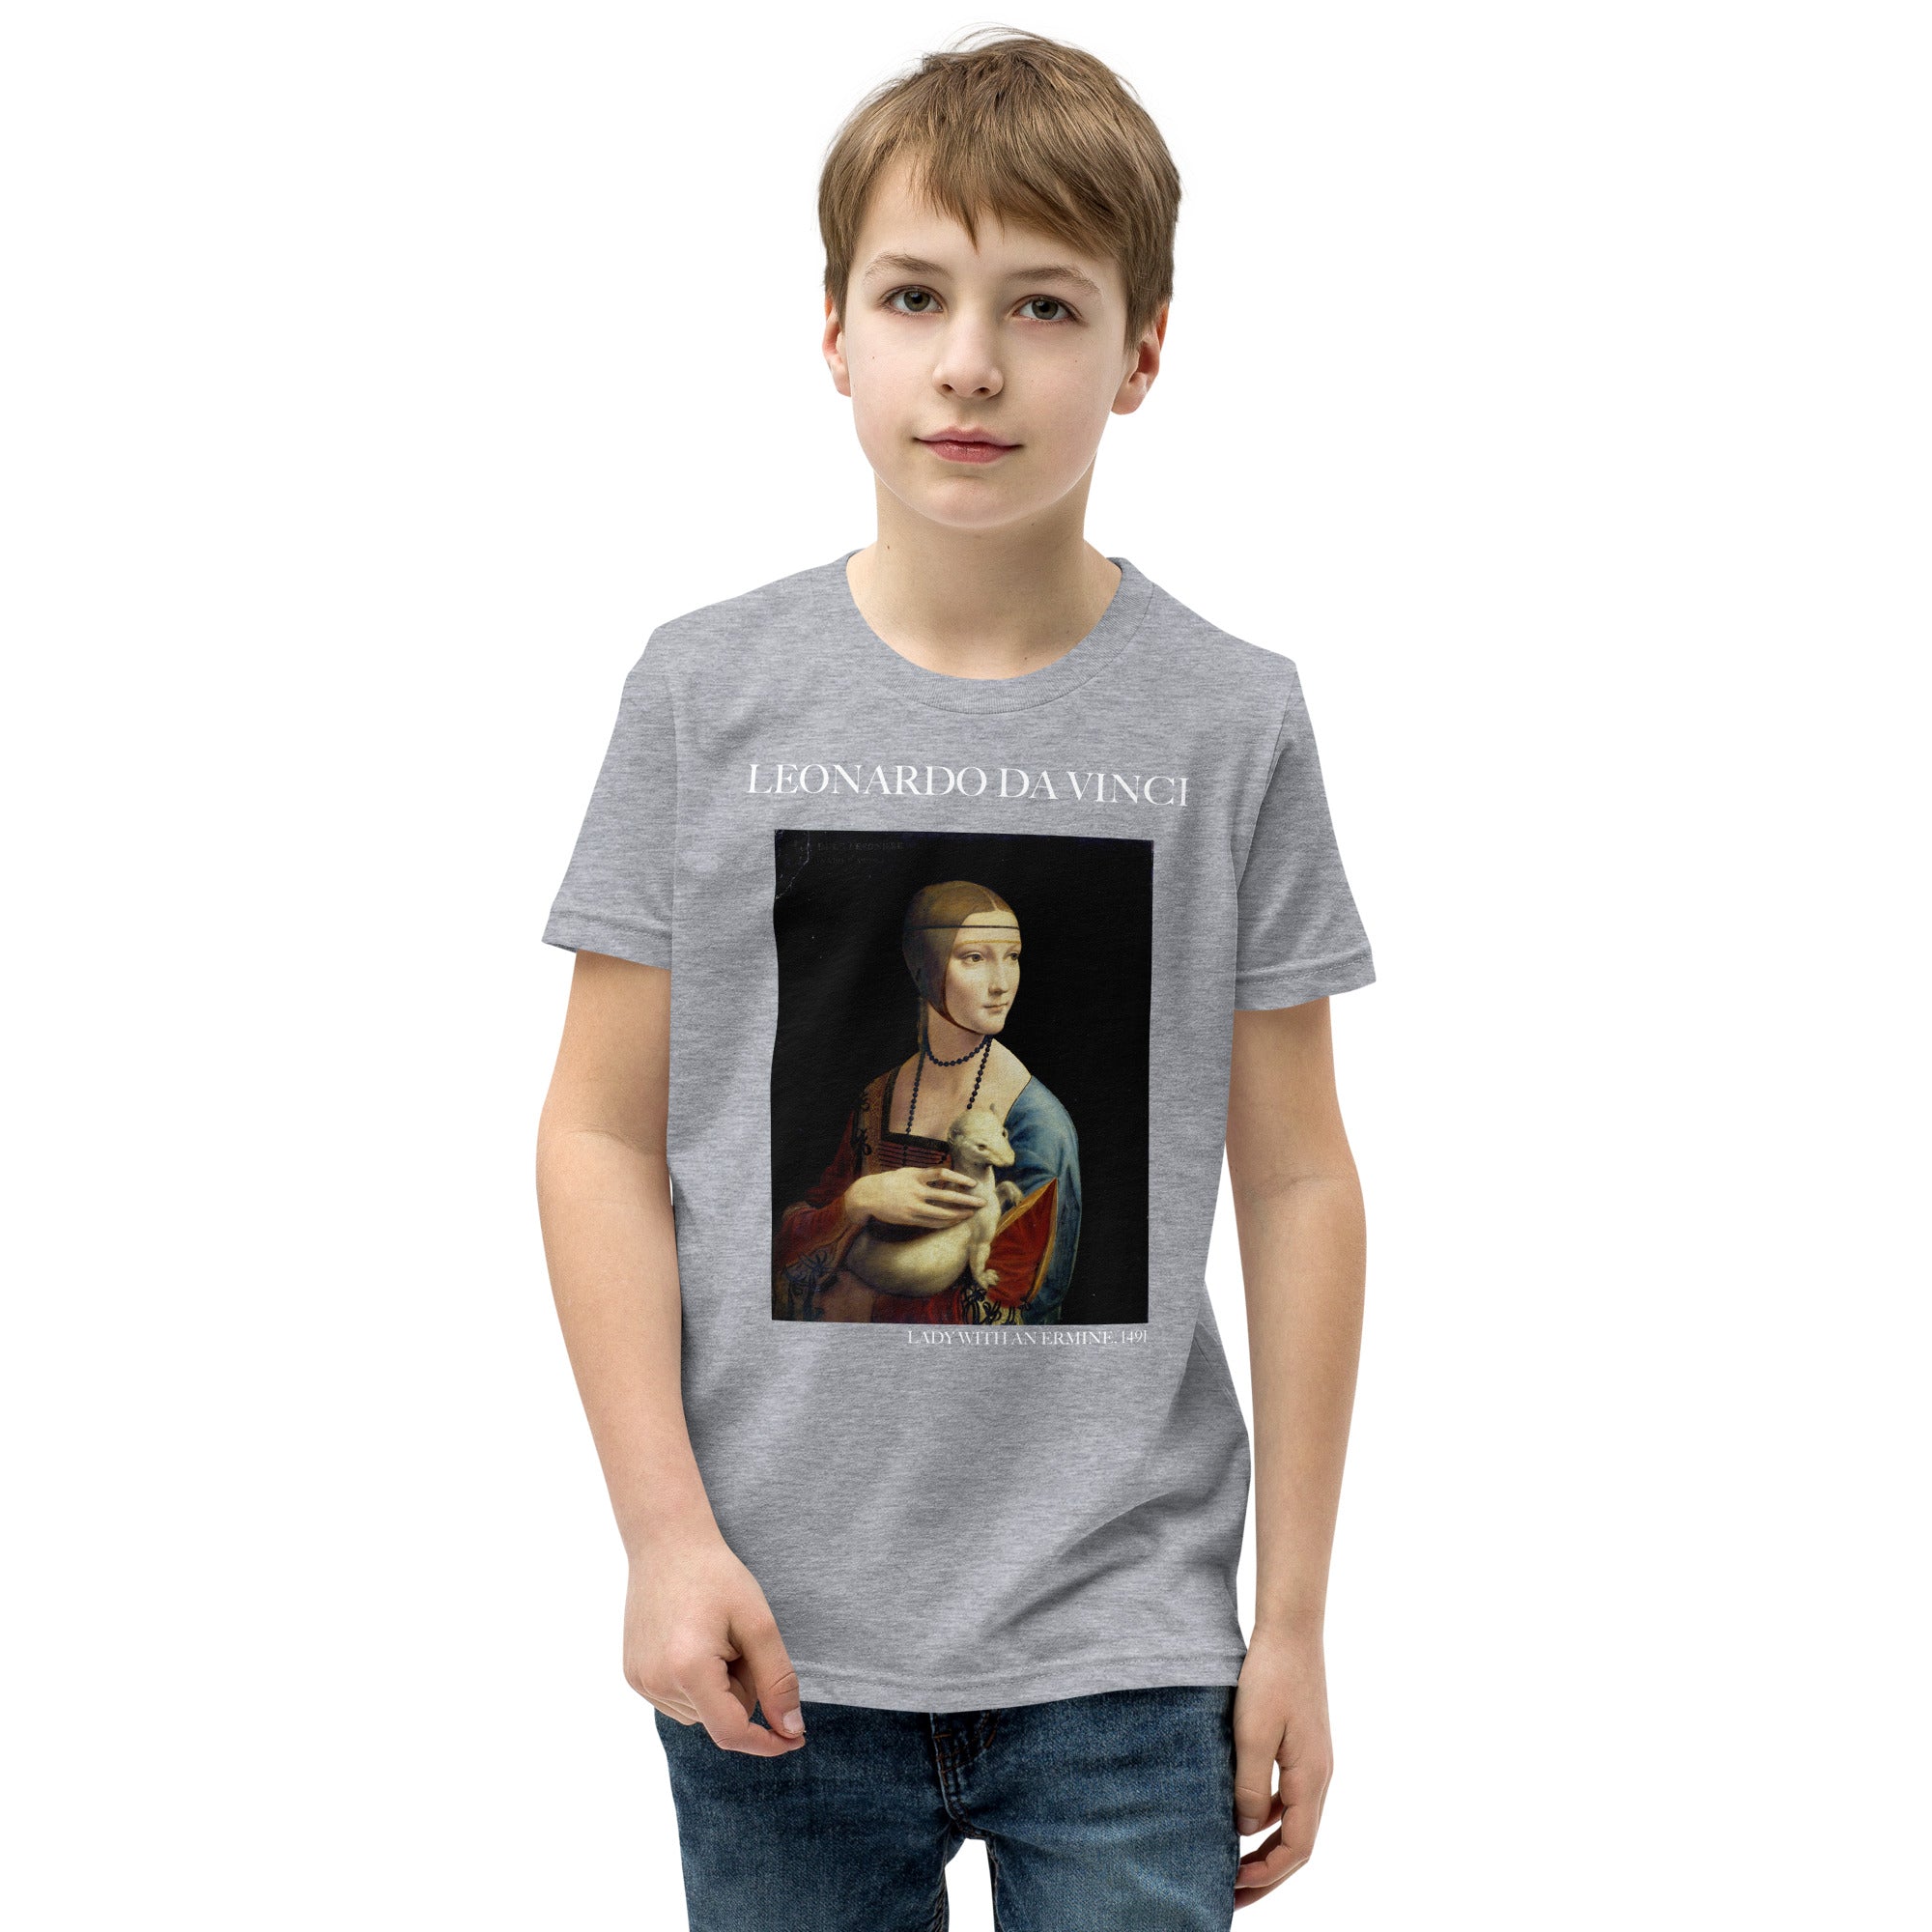 Leonardo da Vinci 'Lady with an Ermine' Famous Painting Short Sleeve T-Shirt | Premium Youth Art Tee